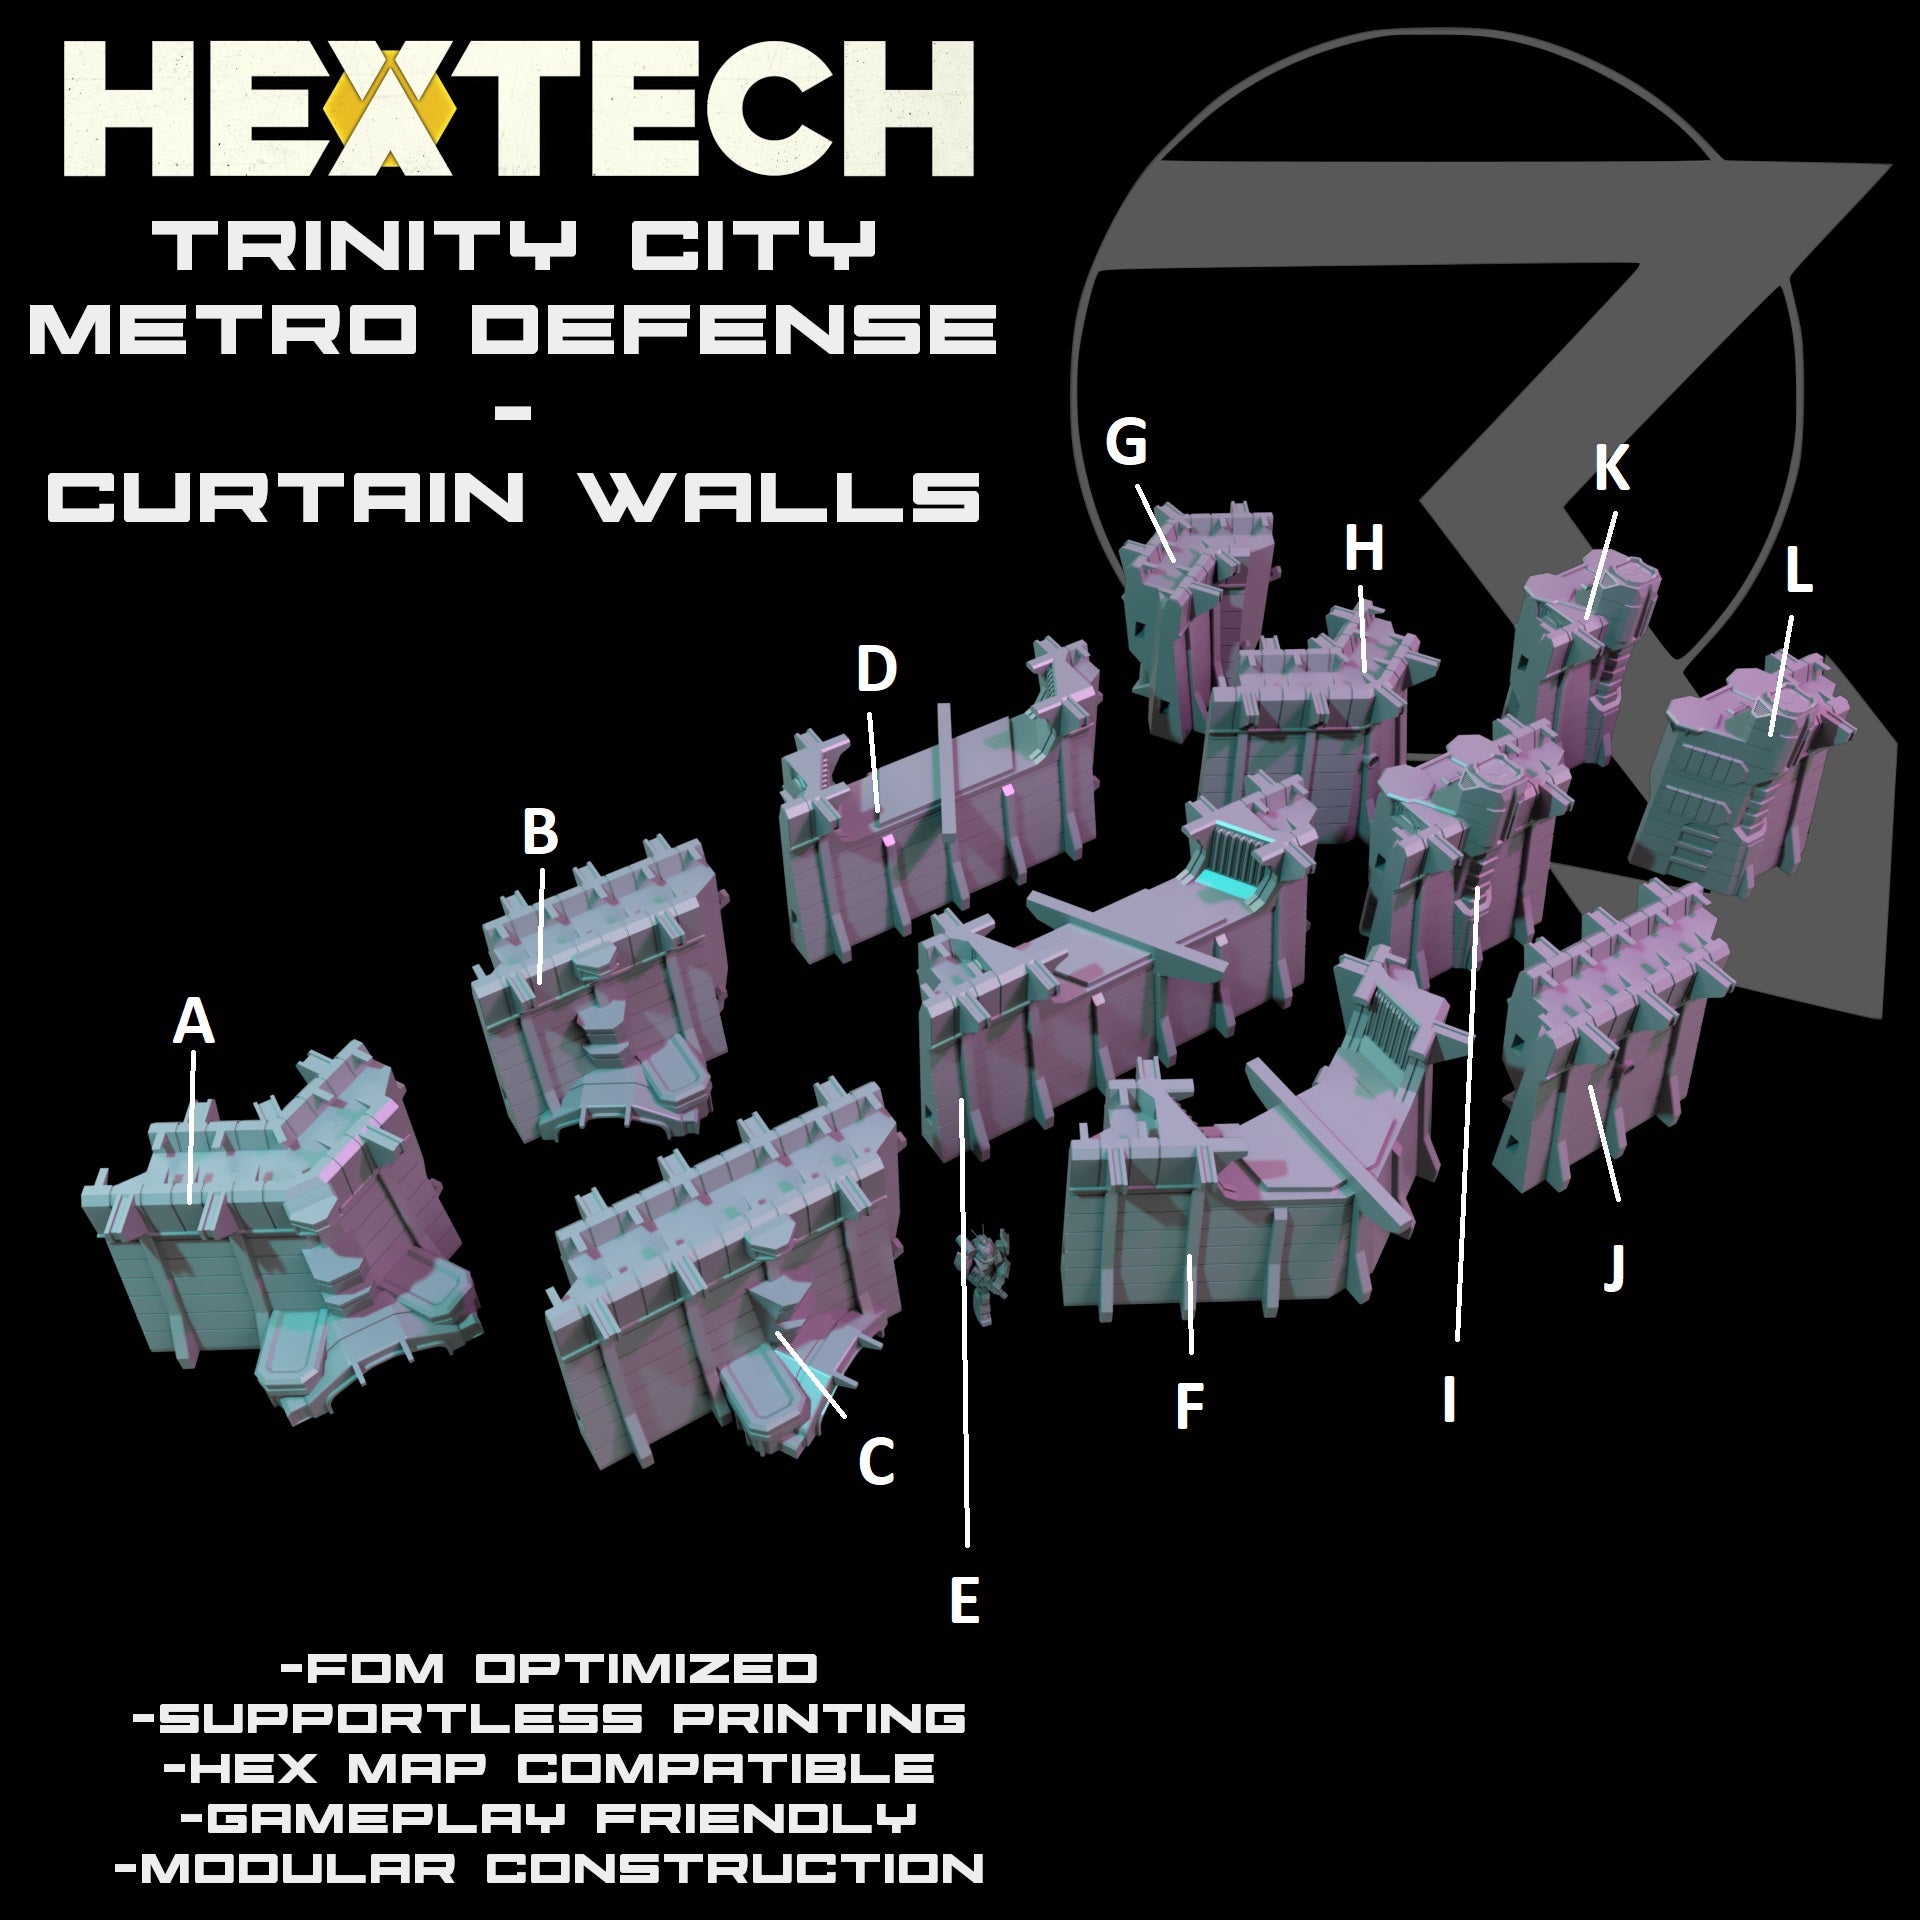 HEXTECH Metro Defence Walls for Battletech